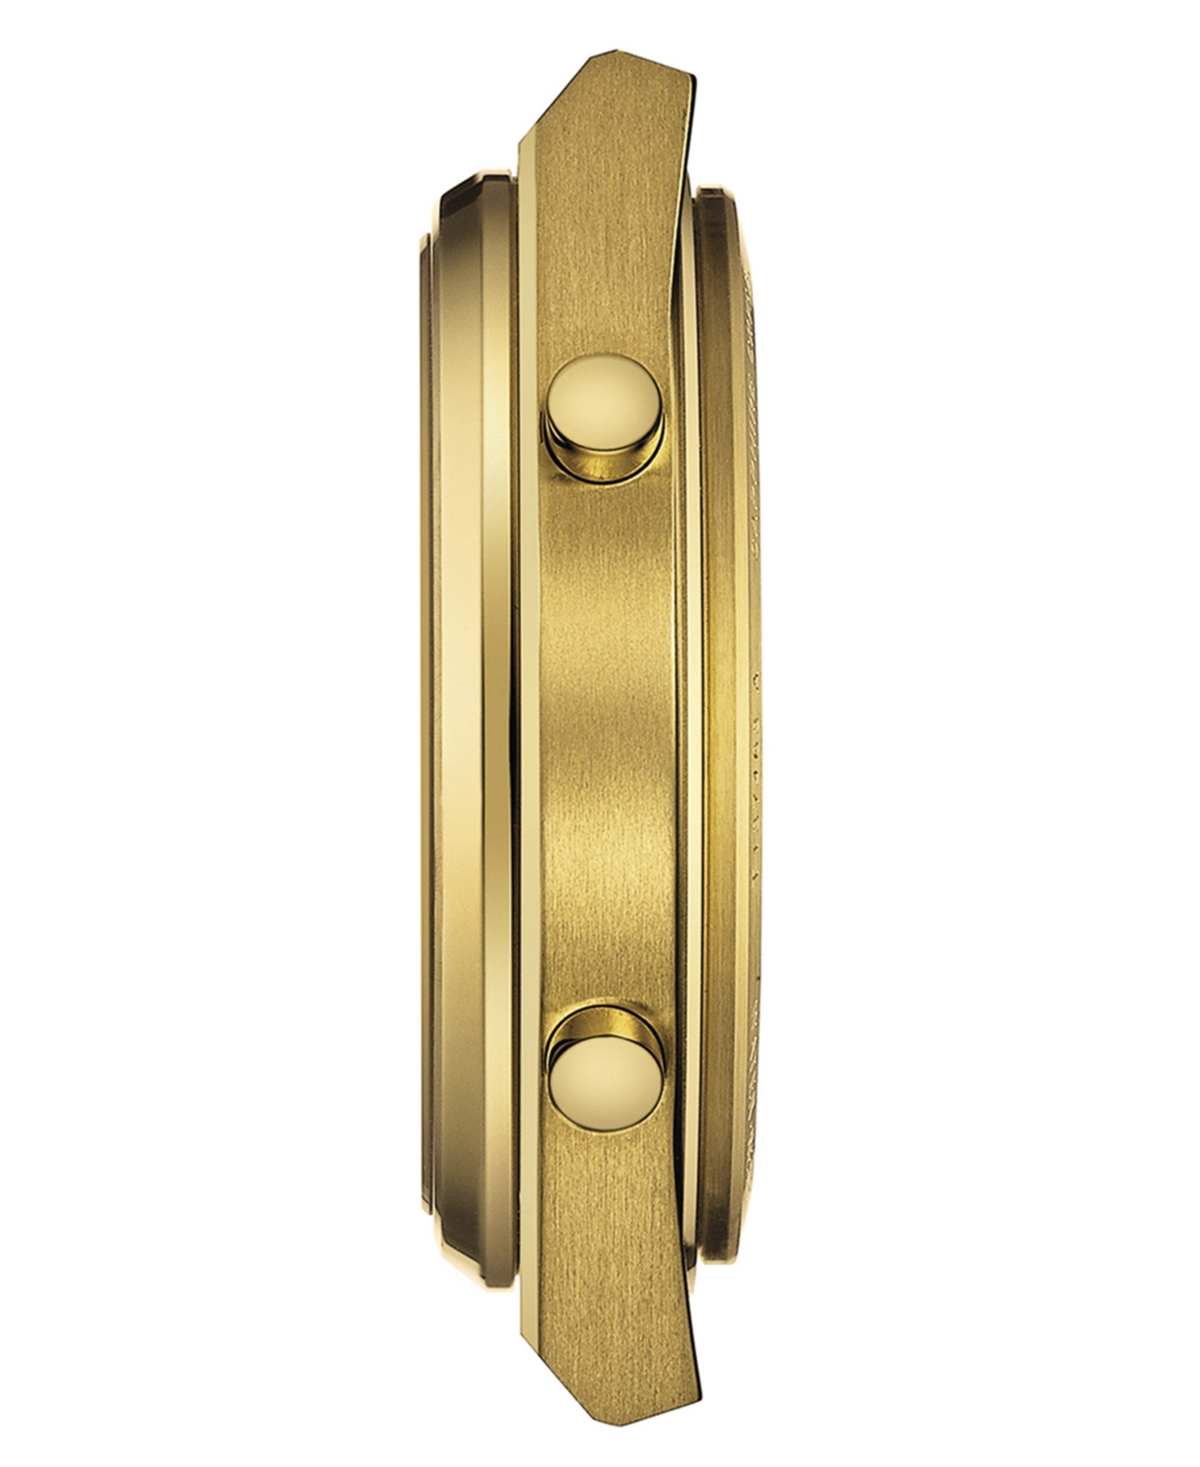 Shop Tissot Men's Digital Prx Gold Pvd Stainless Steel Bracelet Watch 40mm